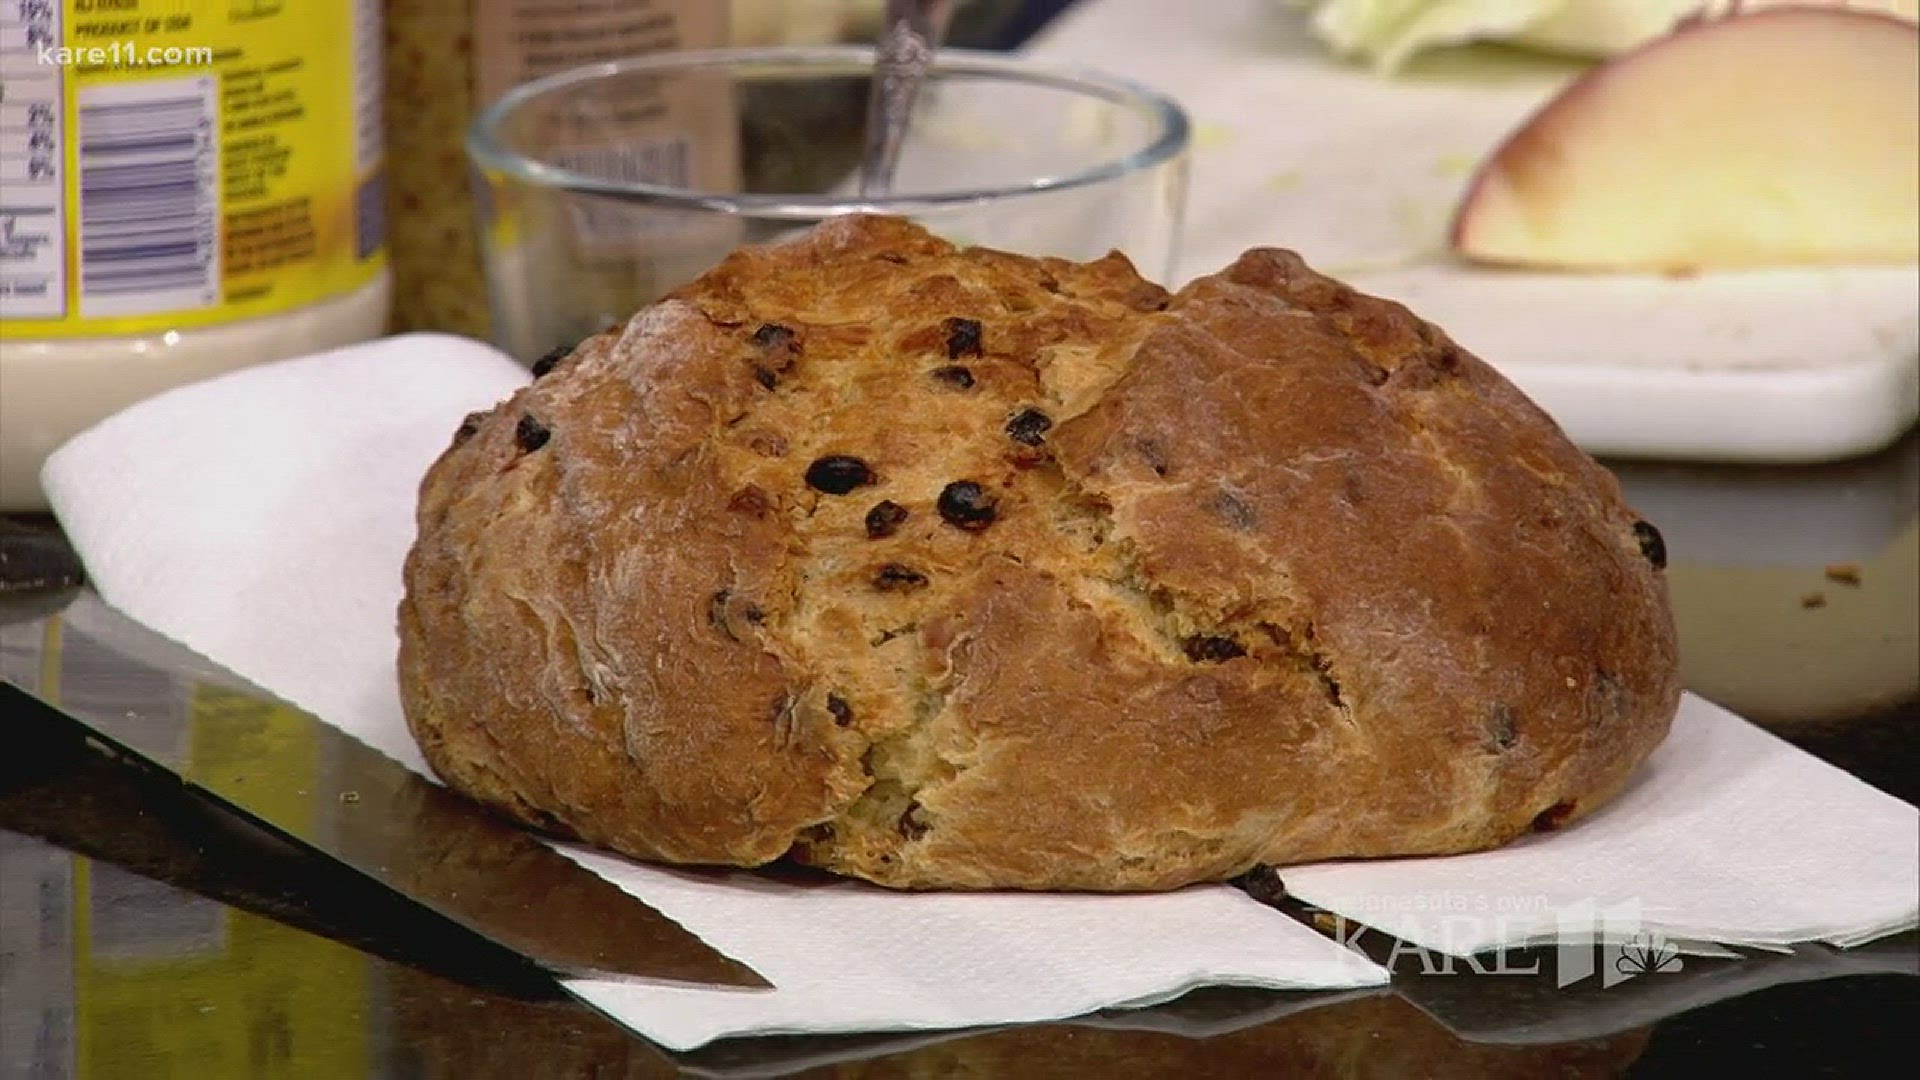 James Beard nominee, Chef Beth Dooley shared her delicious Irish soda bread recipe.